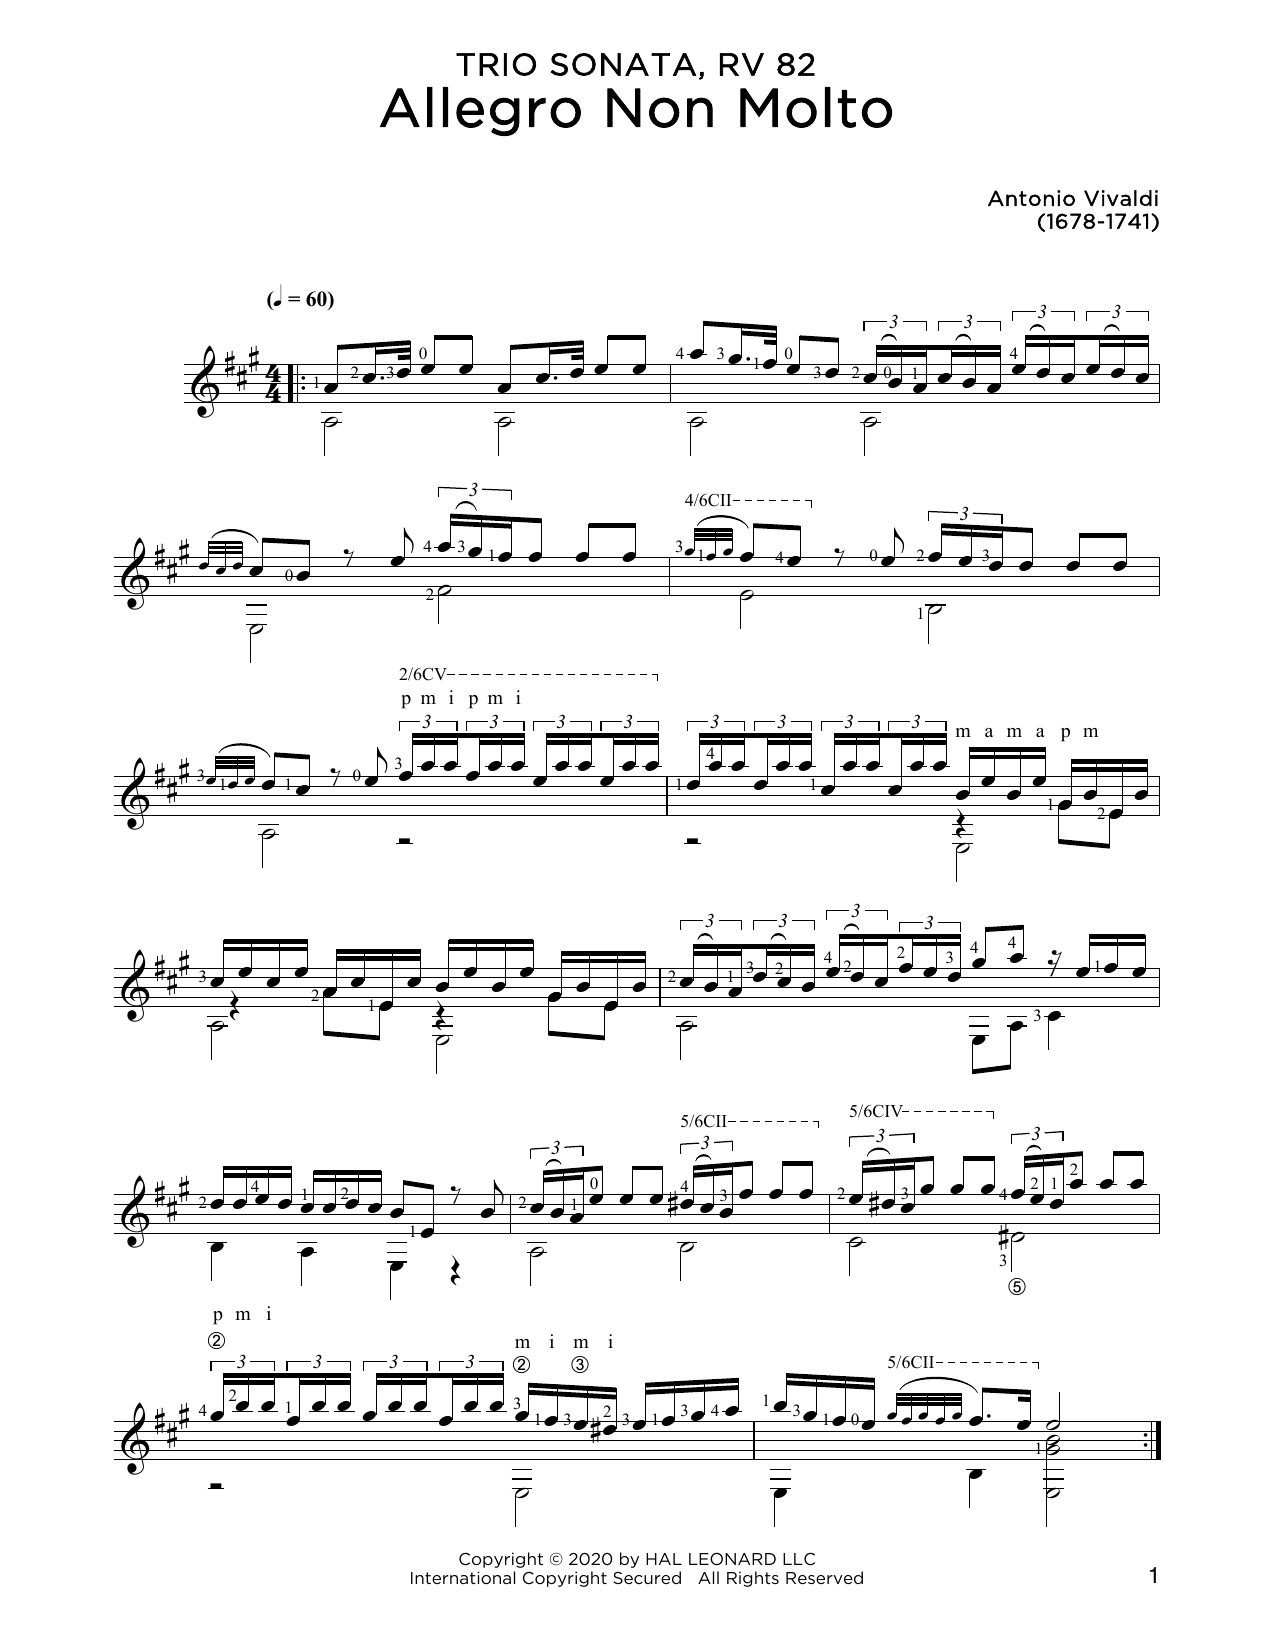 Antonio Vivaldi Allegro Non Molto Sheet Music Notes & Chords for Solo Guitar - Download or Print PDF